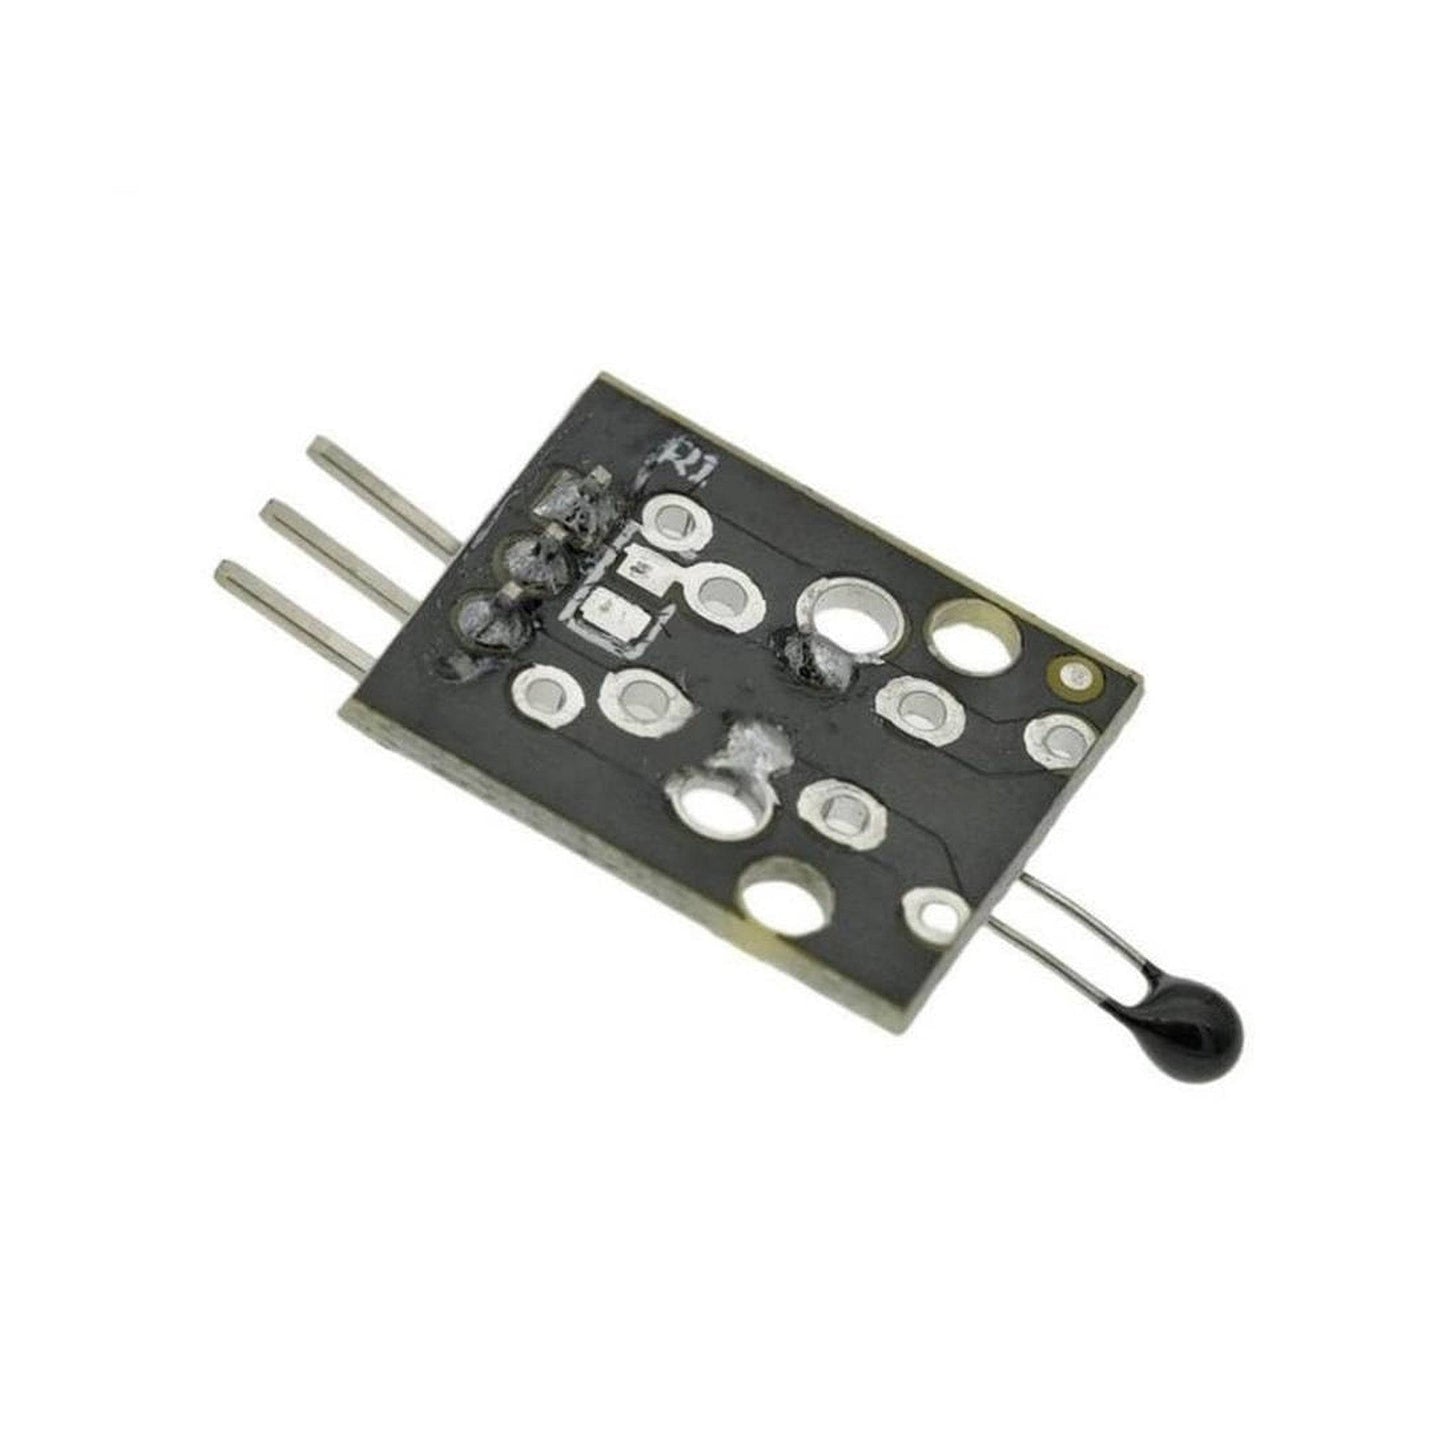 KY-013 Temperature Sensor Module KY-013 Analog